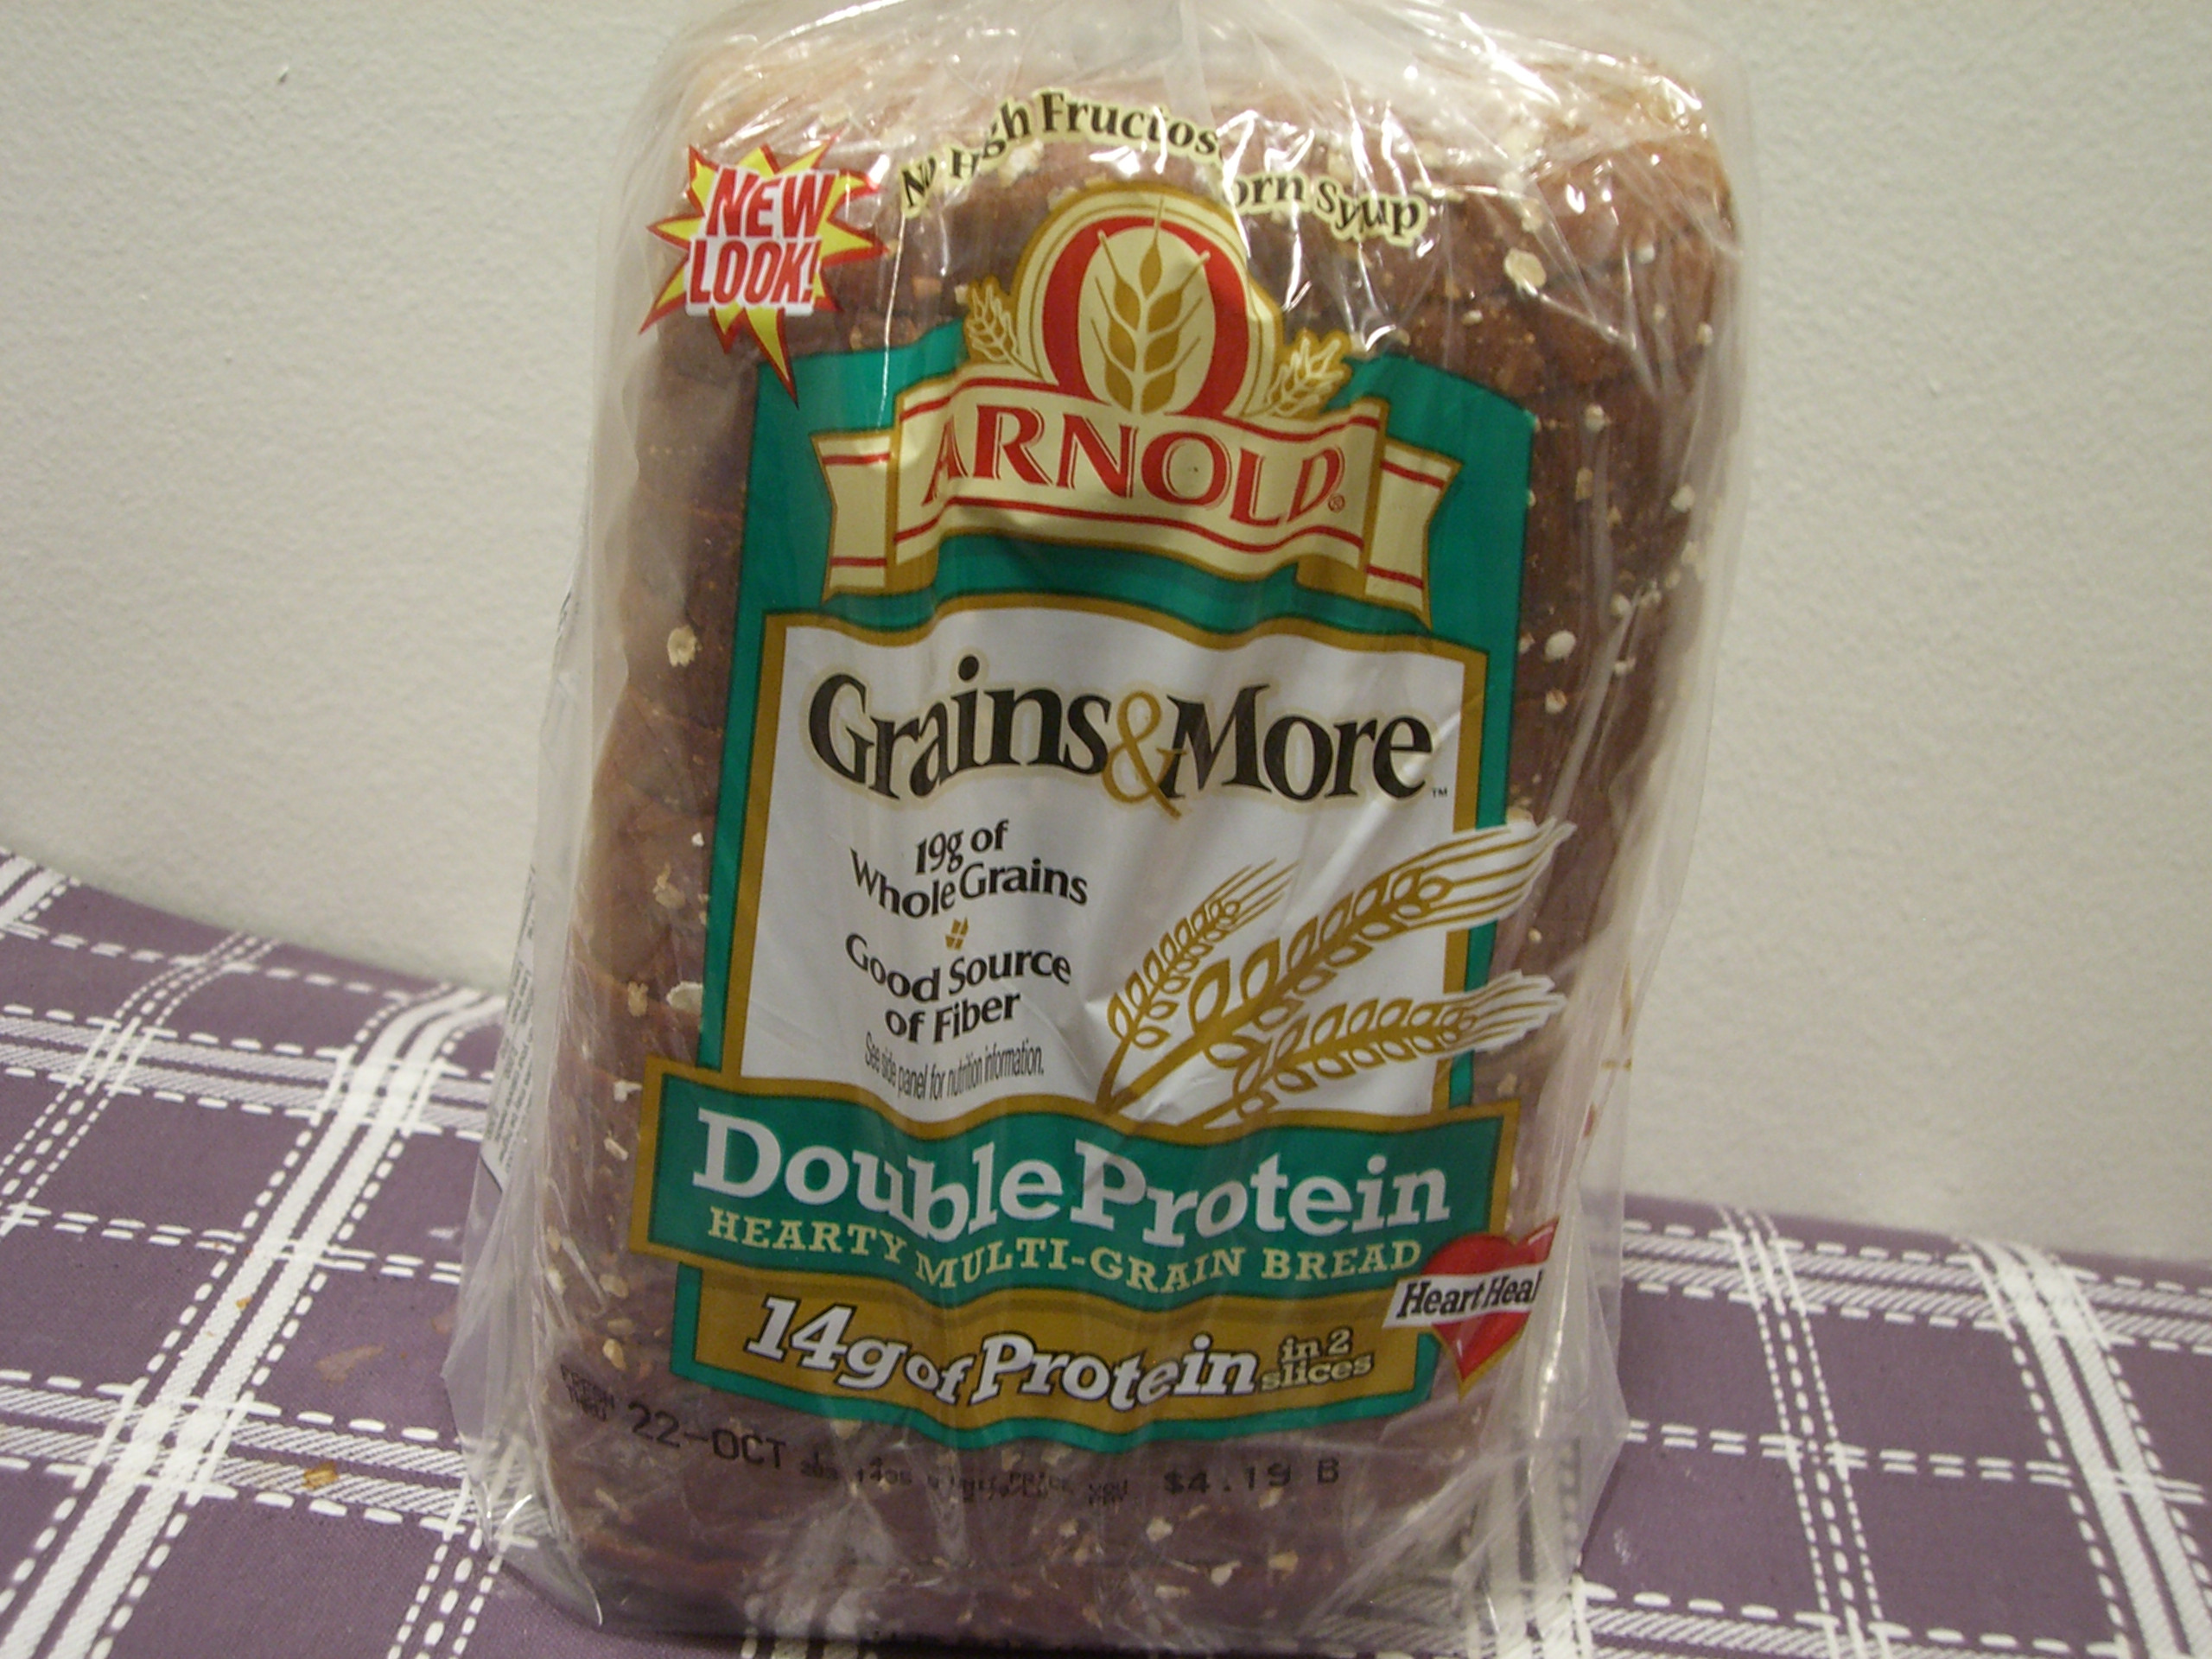 Arnold Whole Grain Bread
 Arnold Grains & More Bread — eating bender